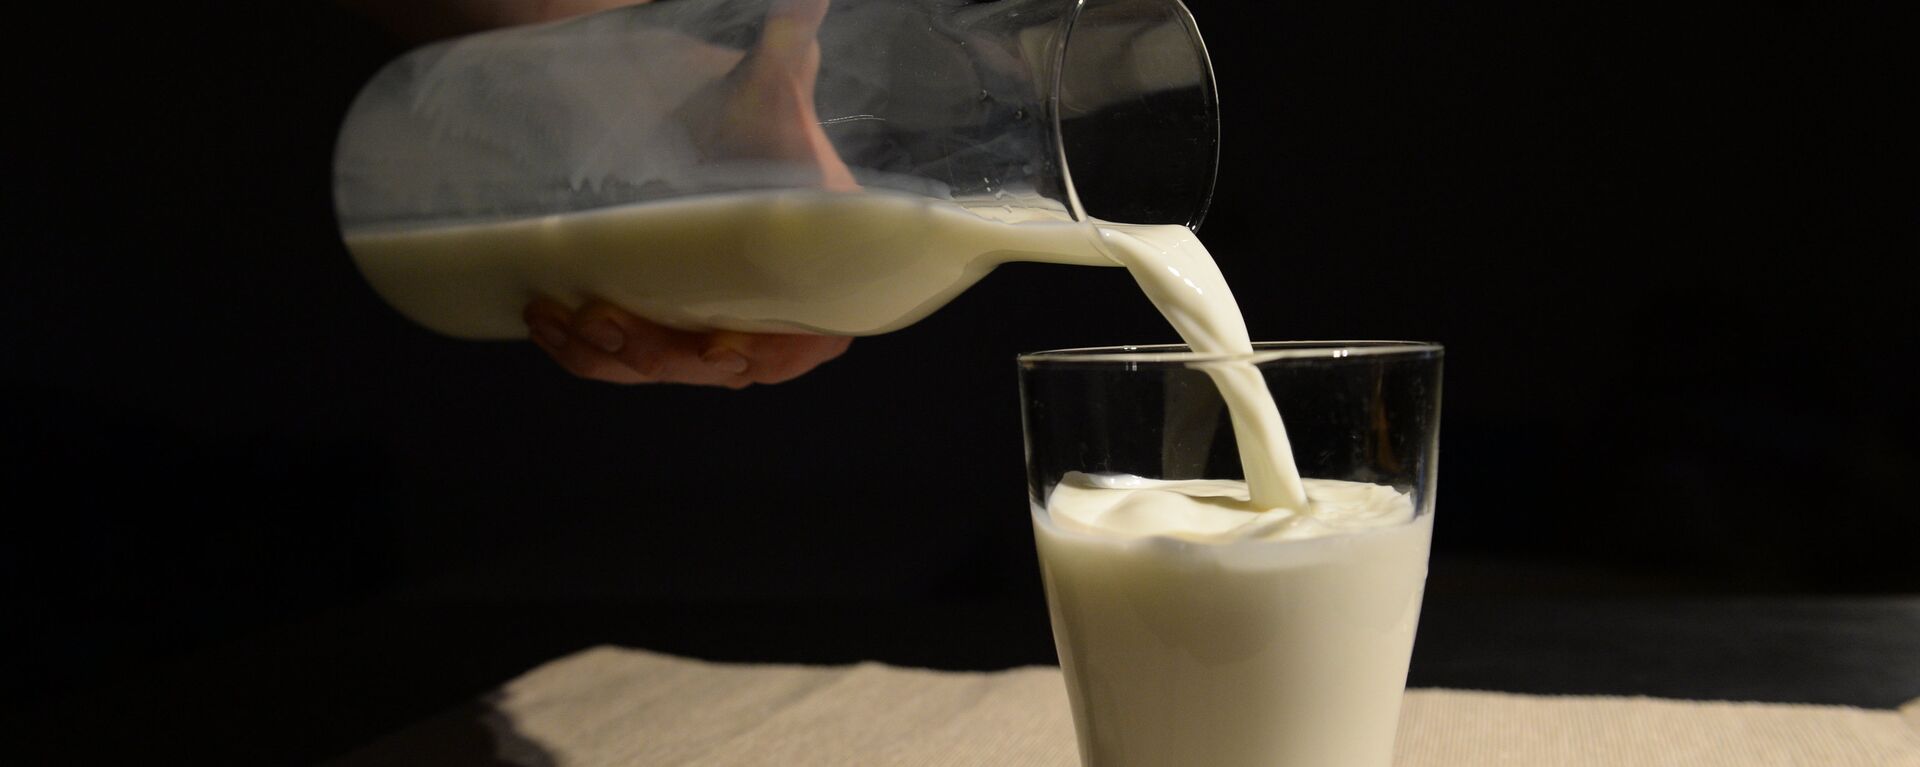 Молоко в стакане - Sputnik Արմենիա, 1920, 23.06.2021